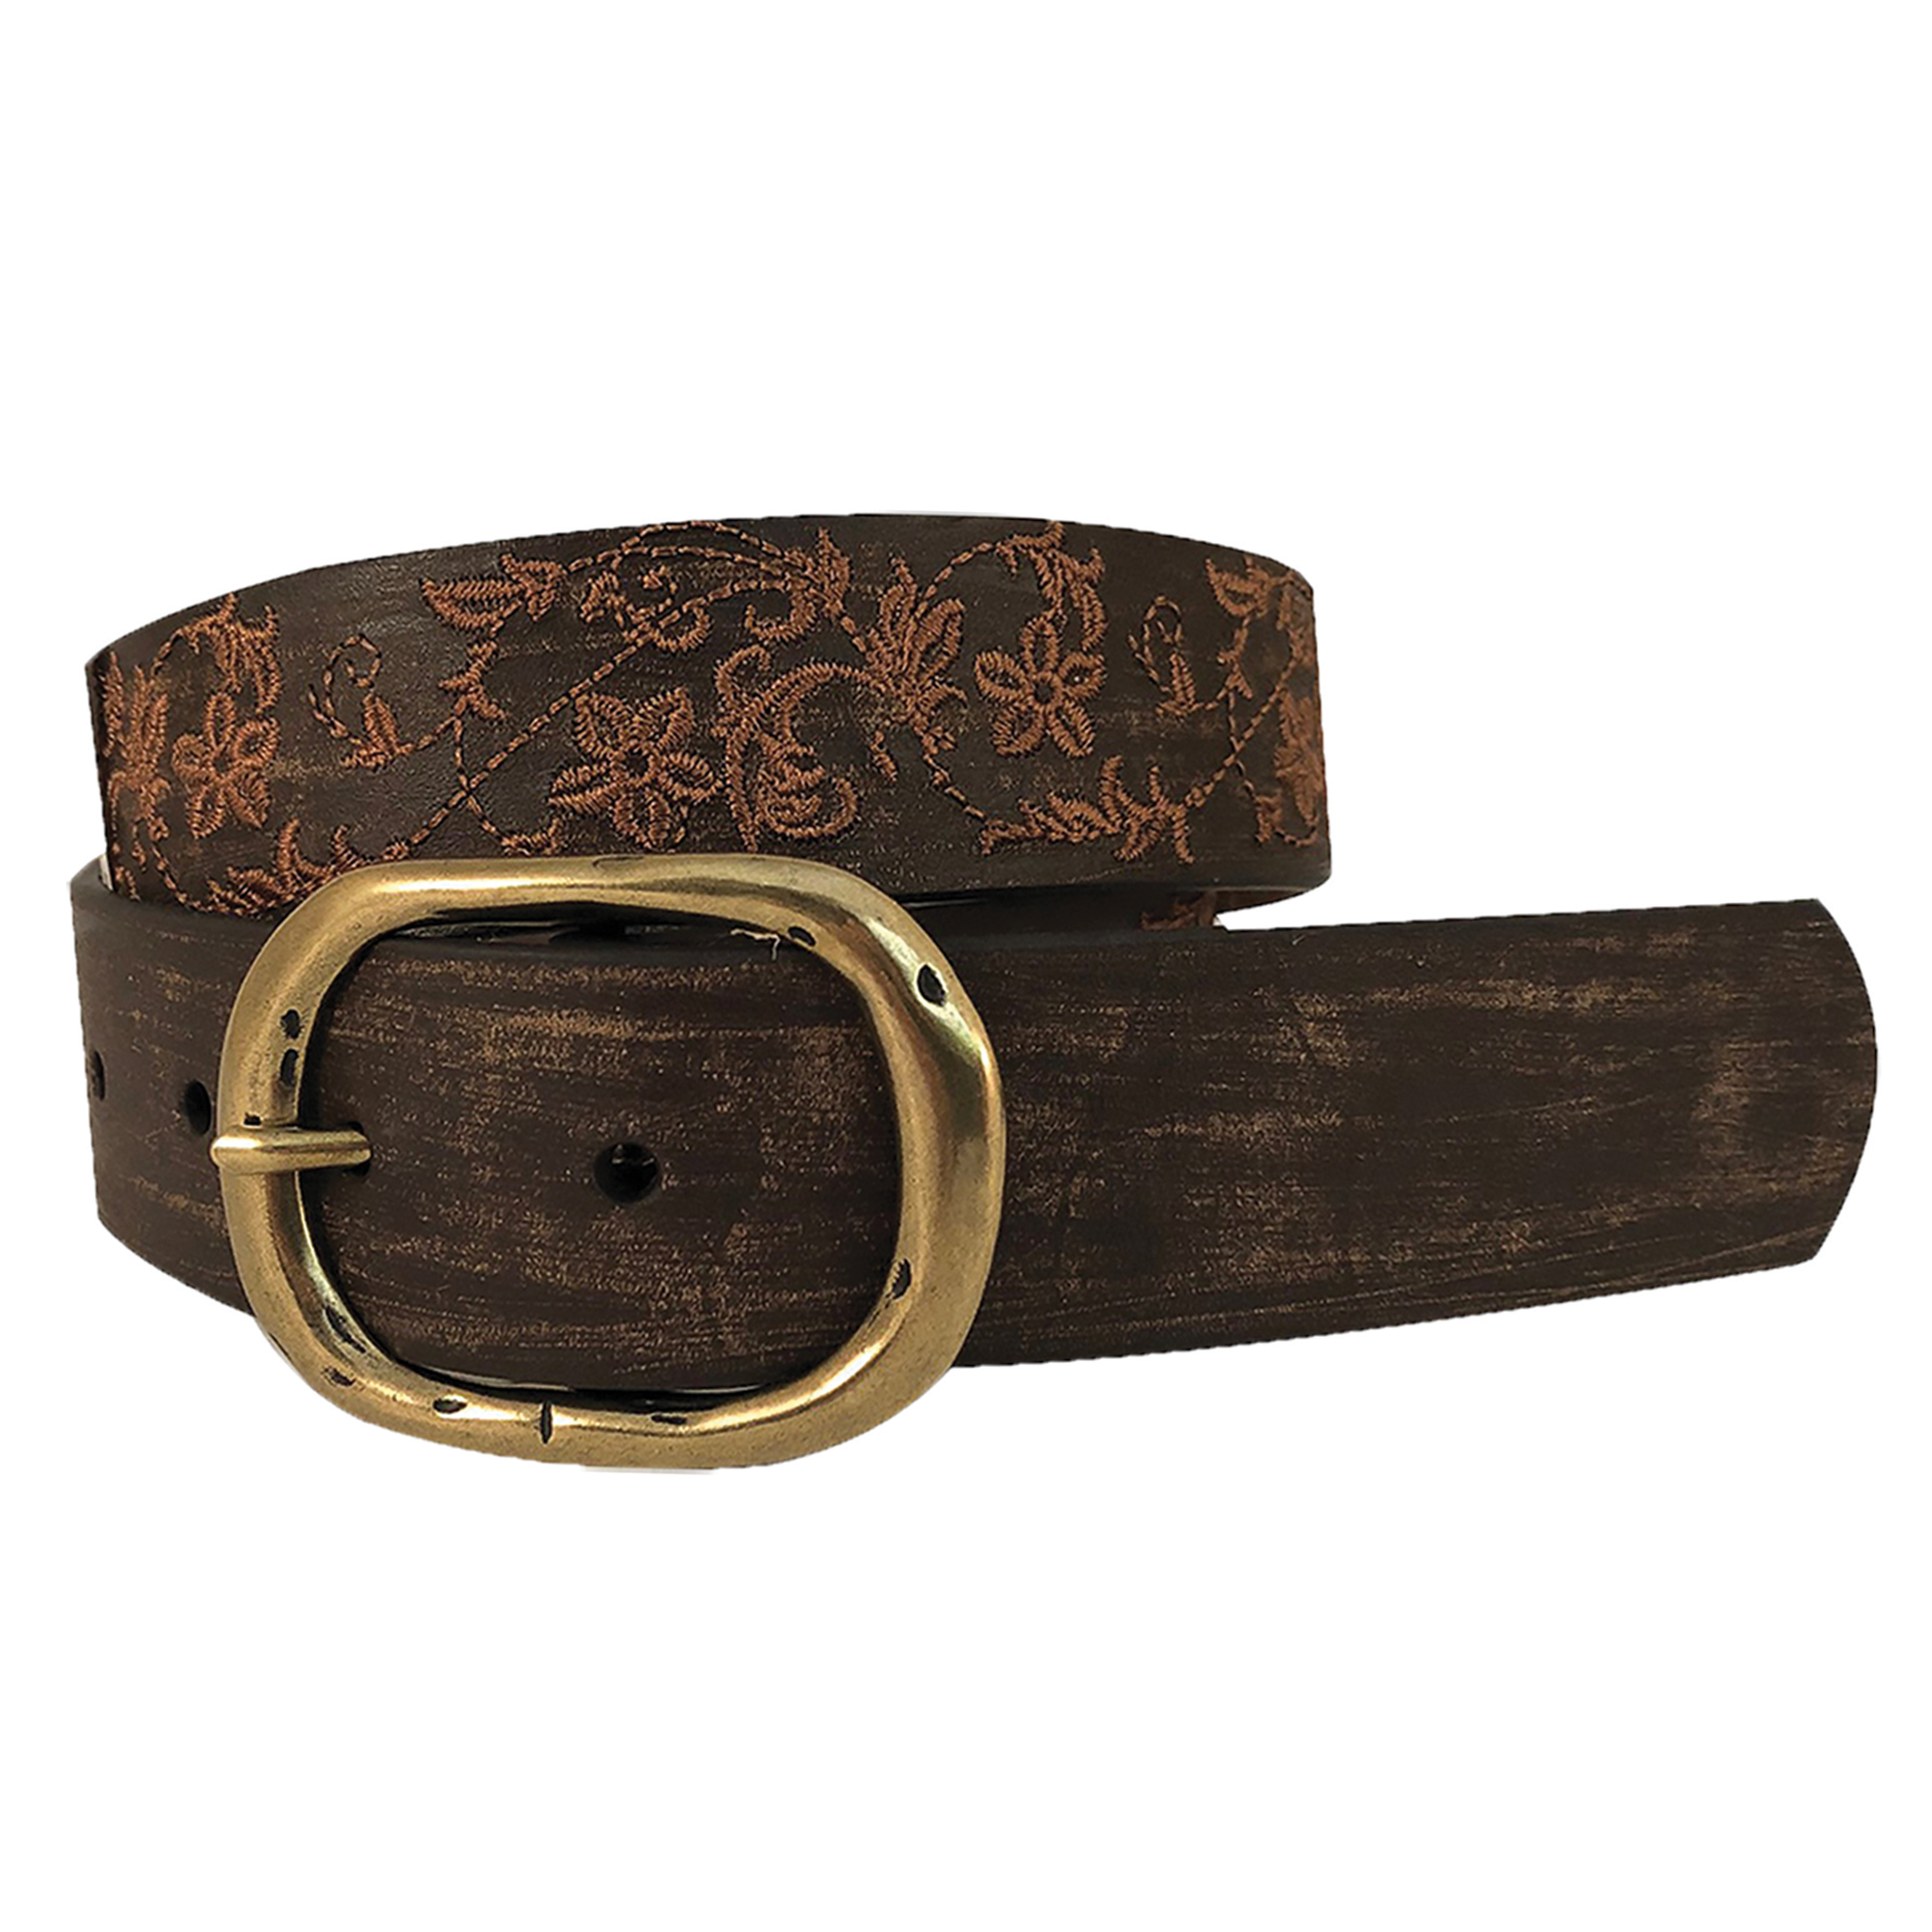 Roper Wms Belt 1.5in Genuine Leather Brown